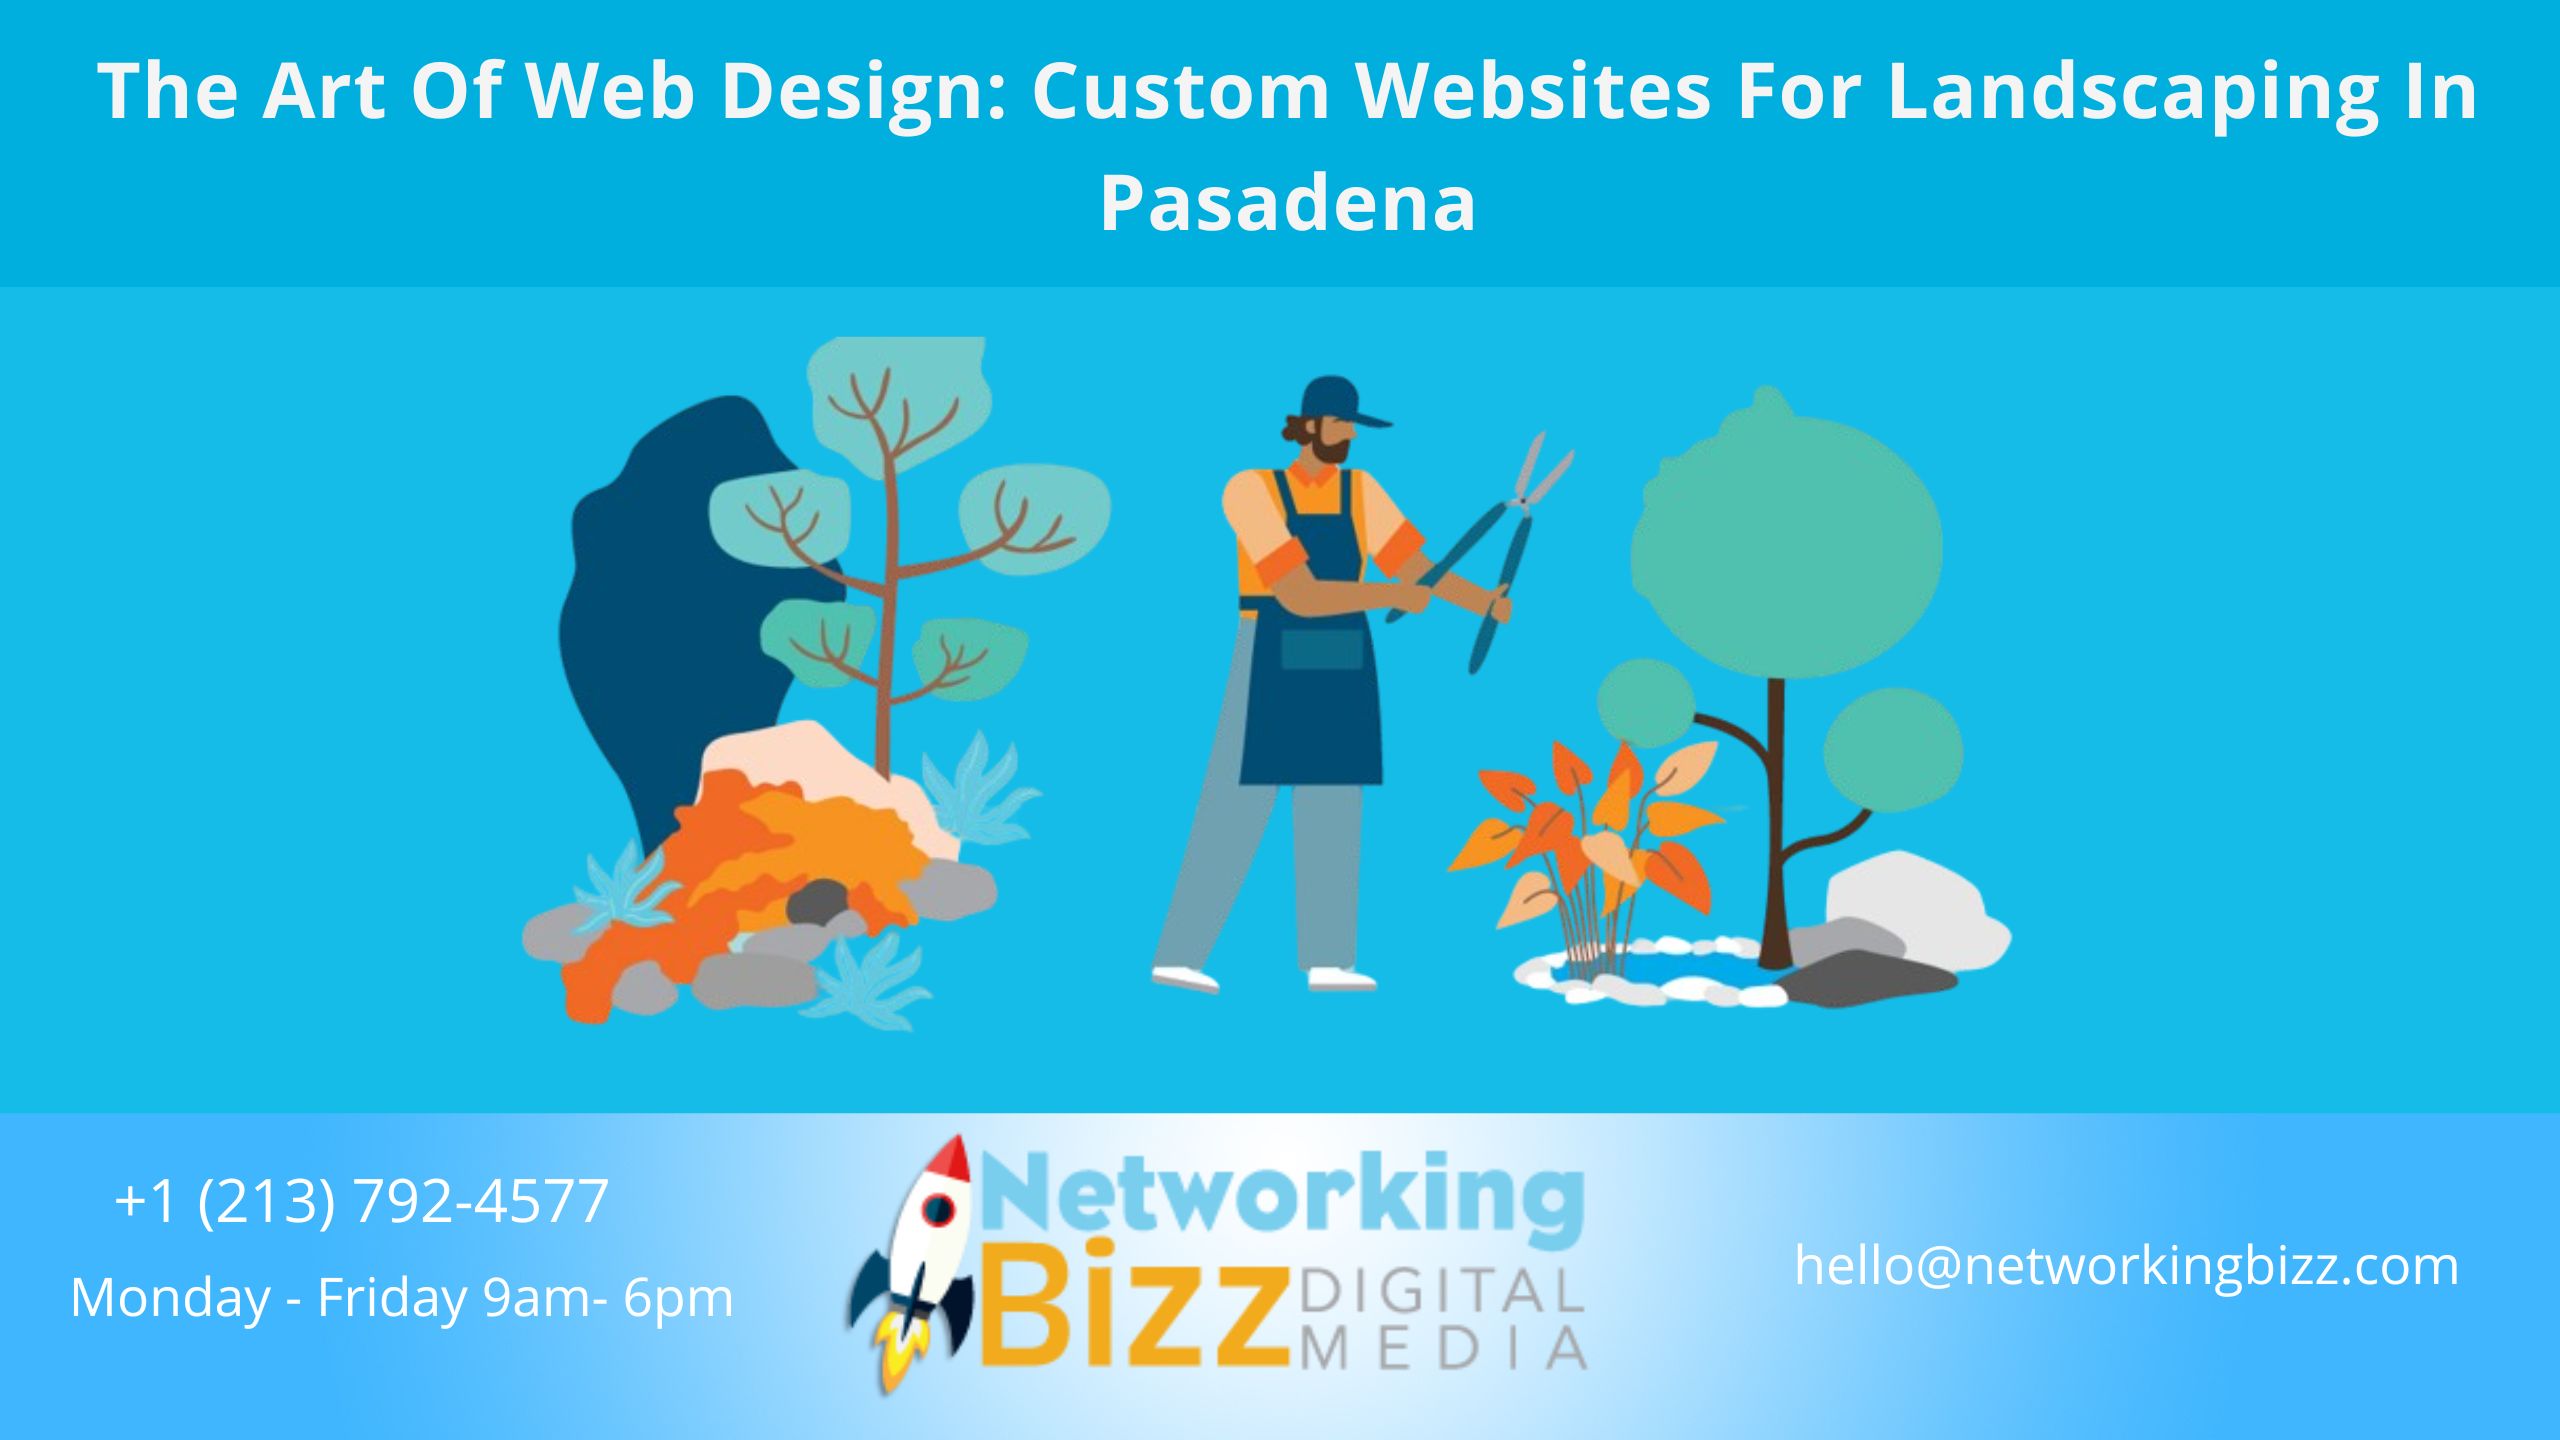 The Art Of Web Design: Custom Websites For Landscaping In Pasadena